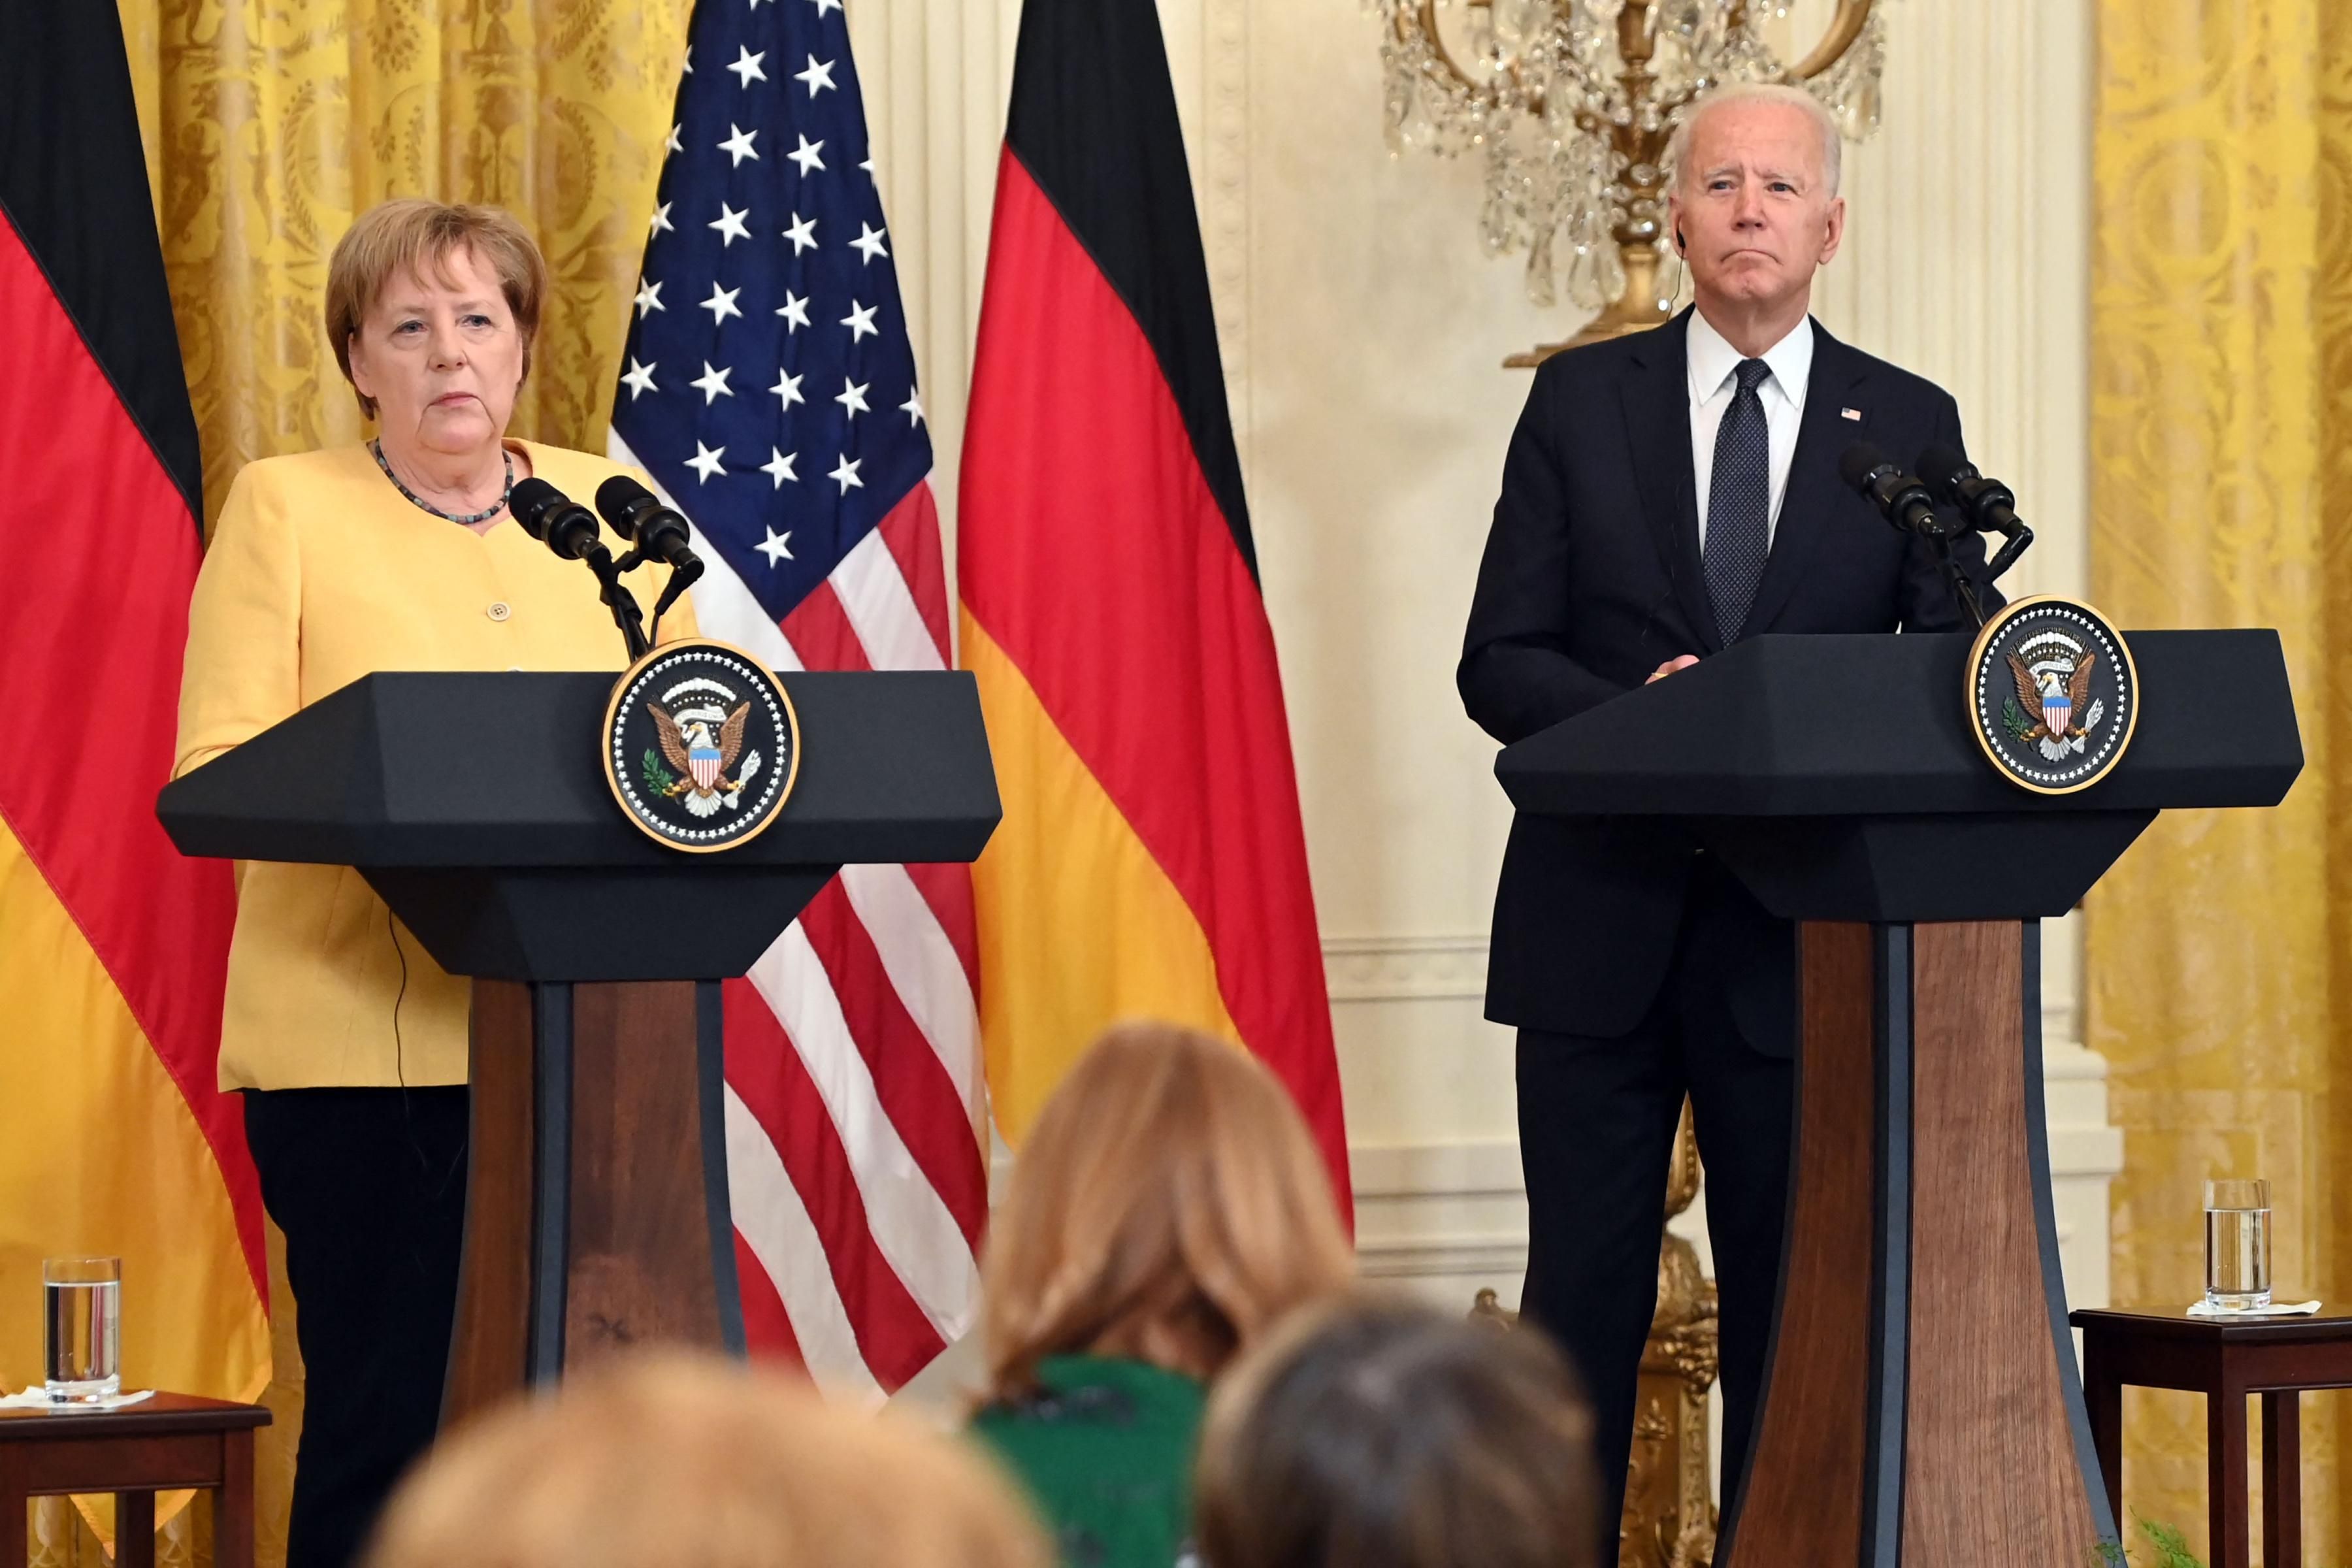 U.S. President Joe Biden and German Chancellor Angela Merkel speak at a press conference